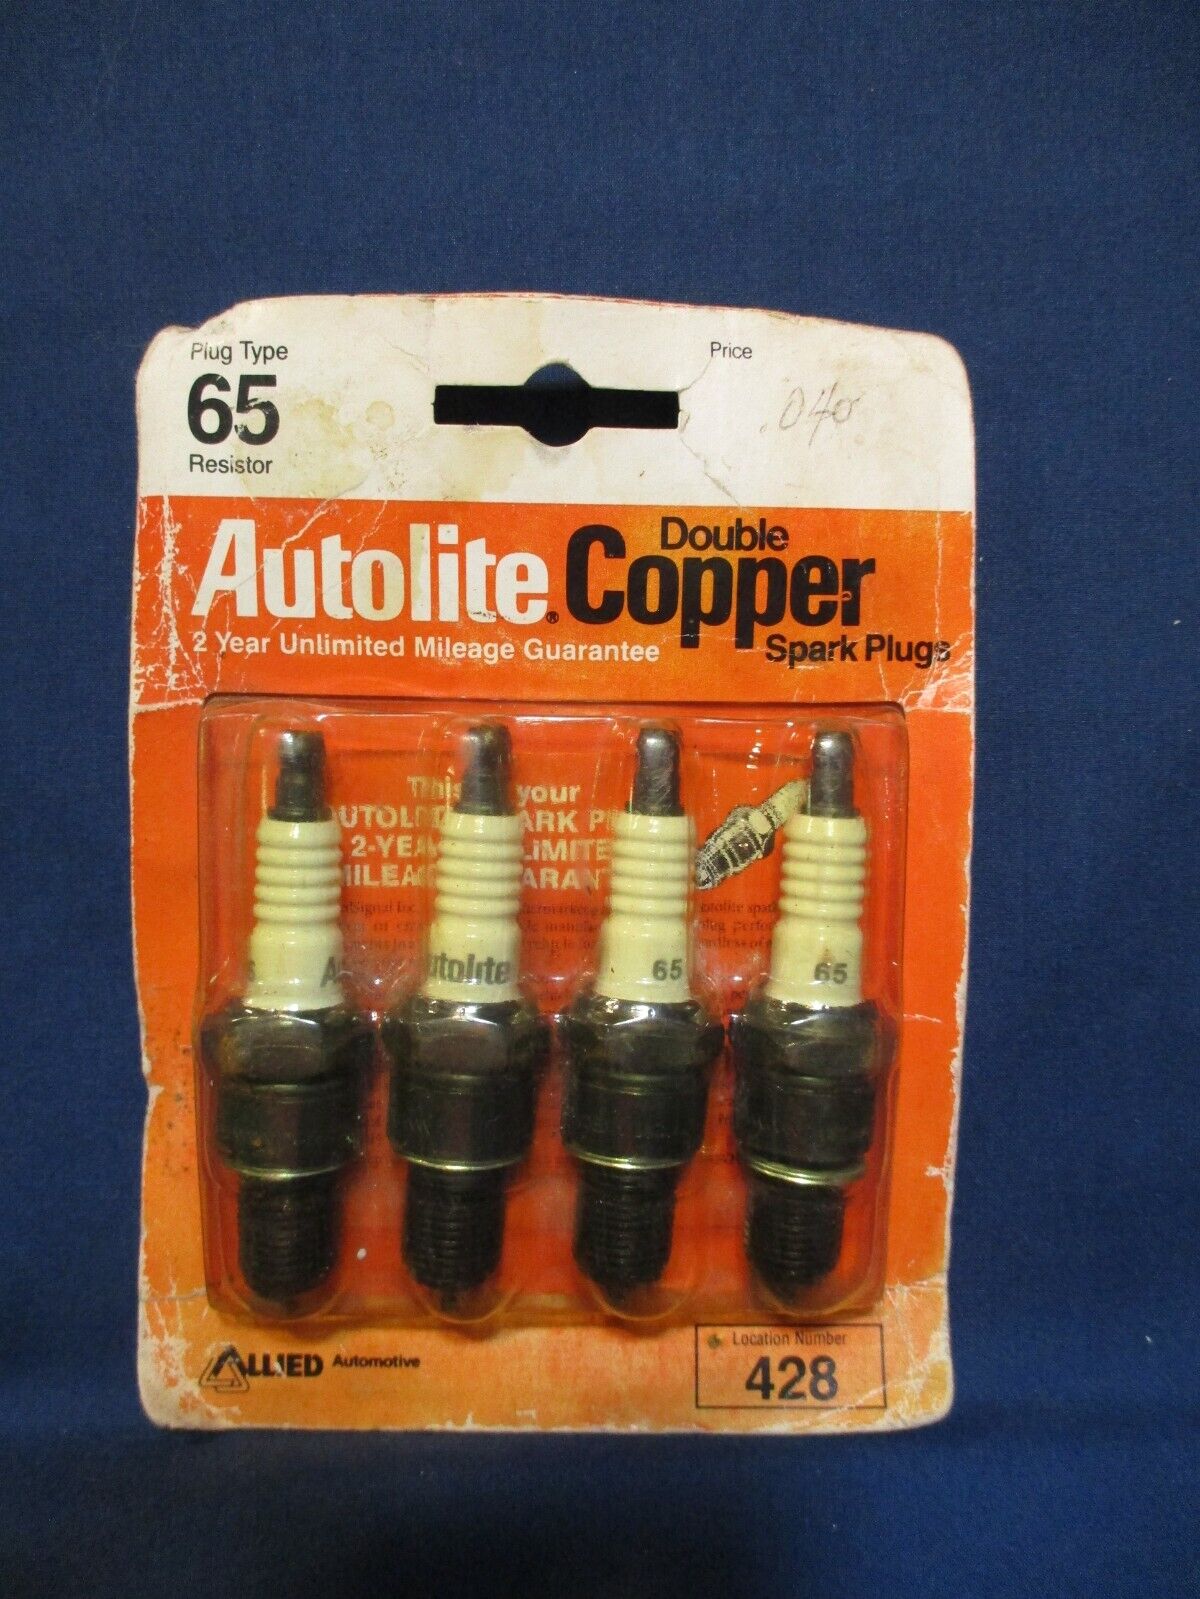 Autolite Double Copper Spark Plugs Plug type 65 Resistor pack of 4